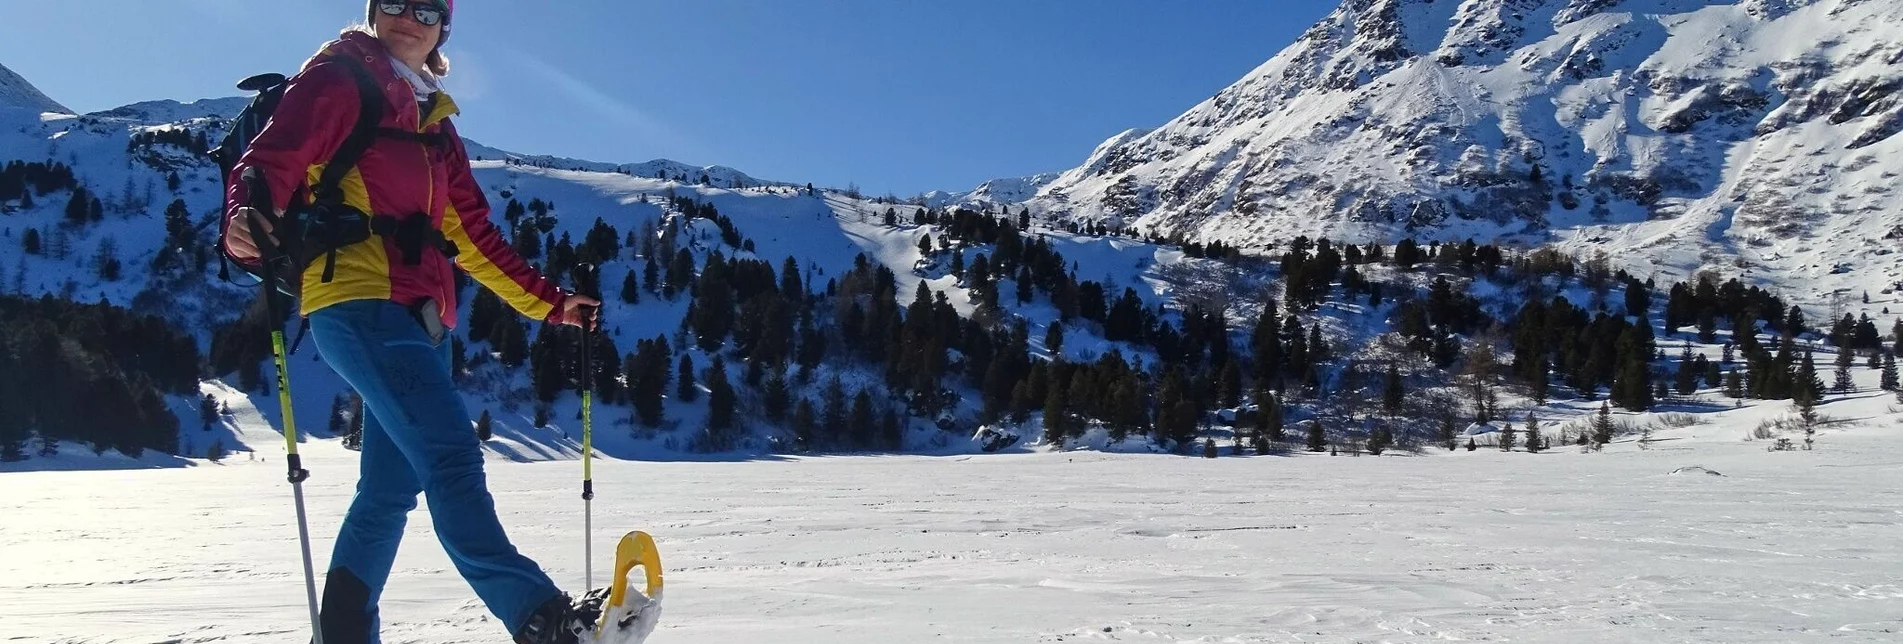 Schneeschuh Schneeschuhrodeln zum Großen Winterleitensee - Touren-Impression #1 | © Weges OG